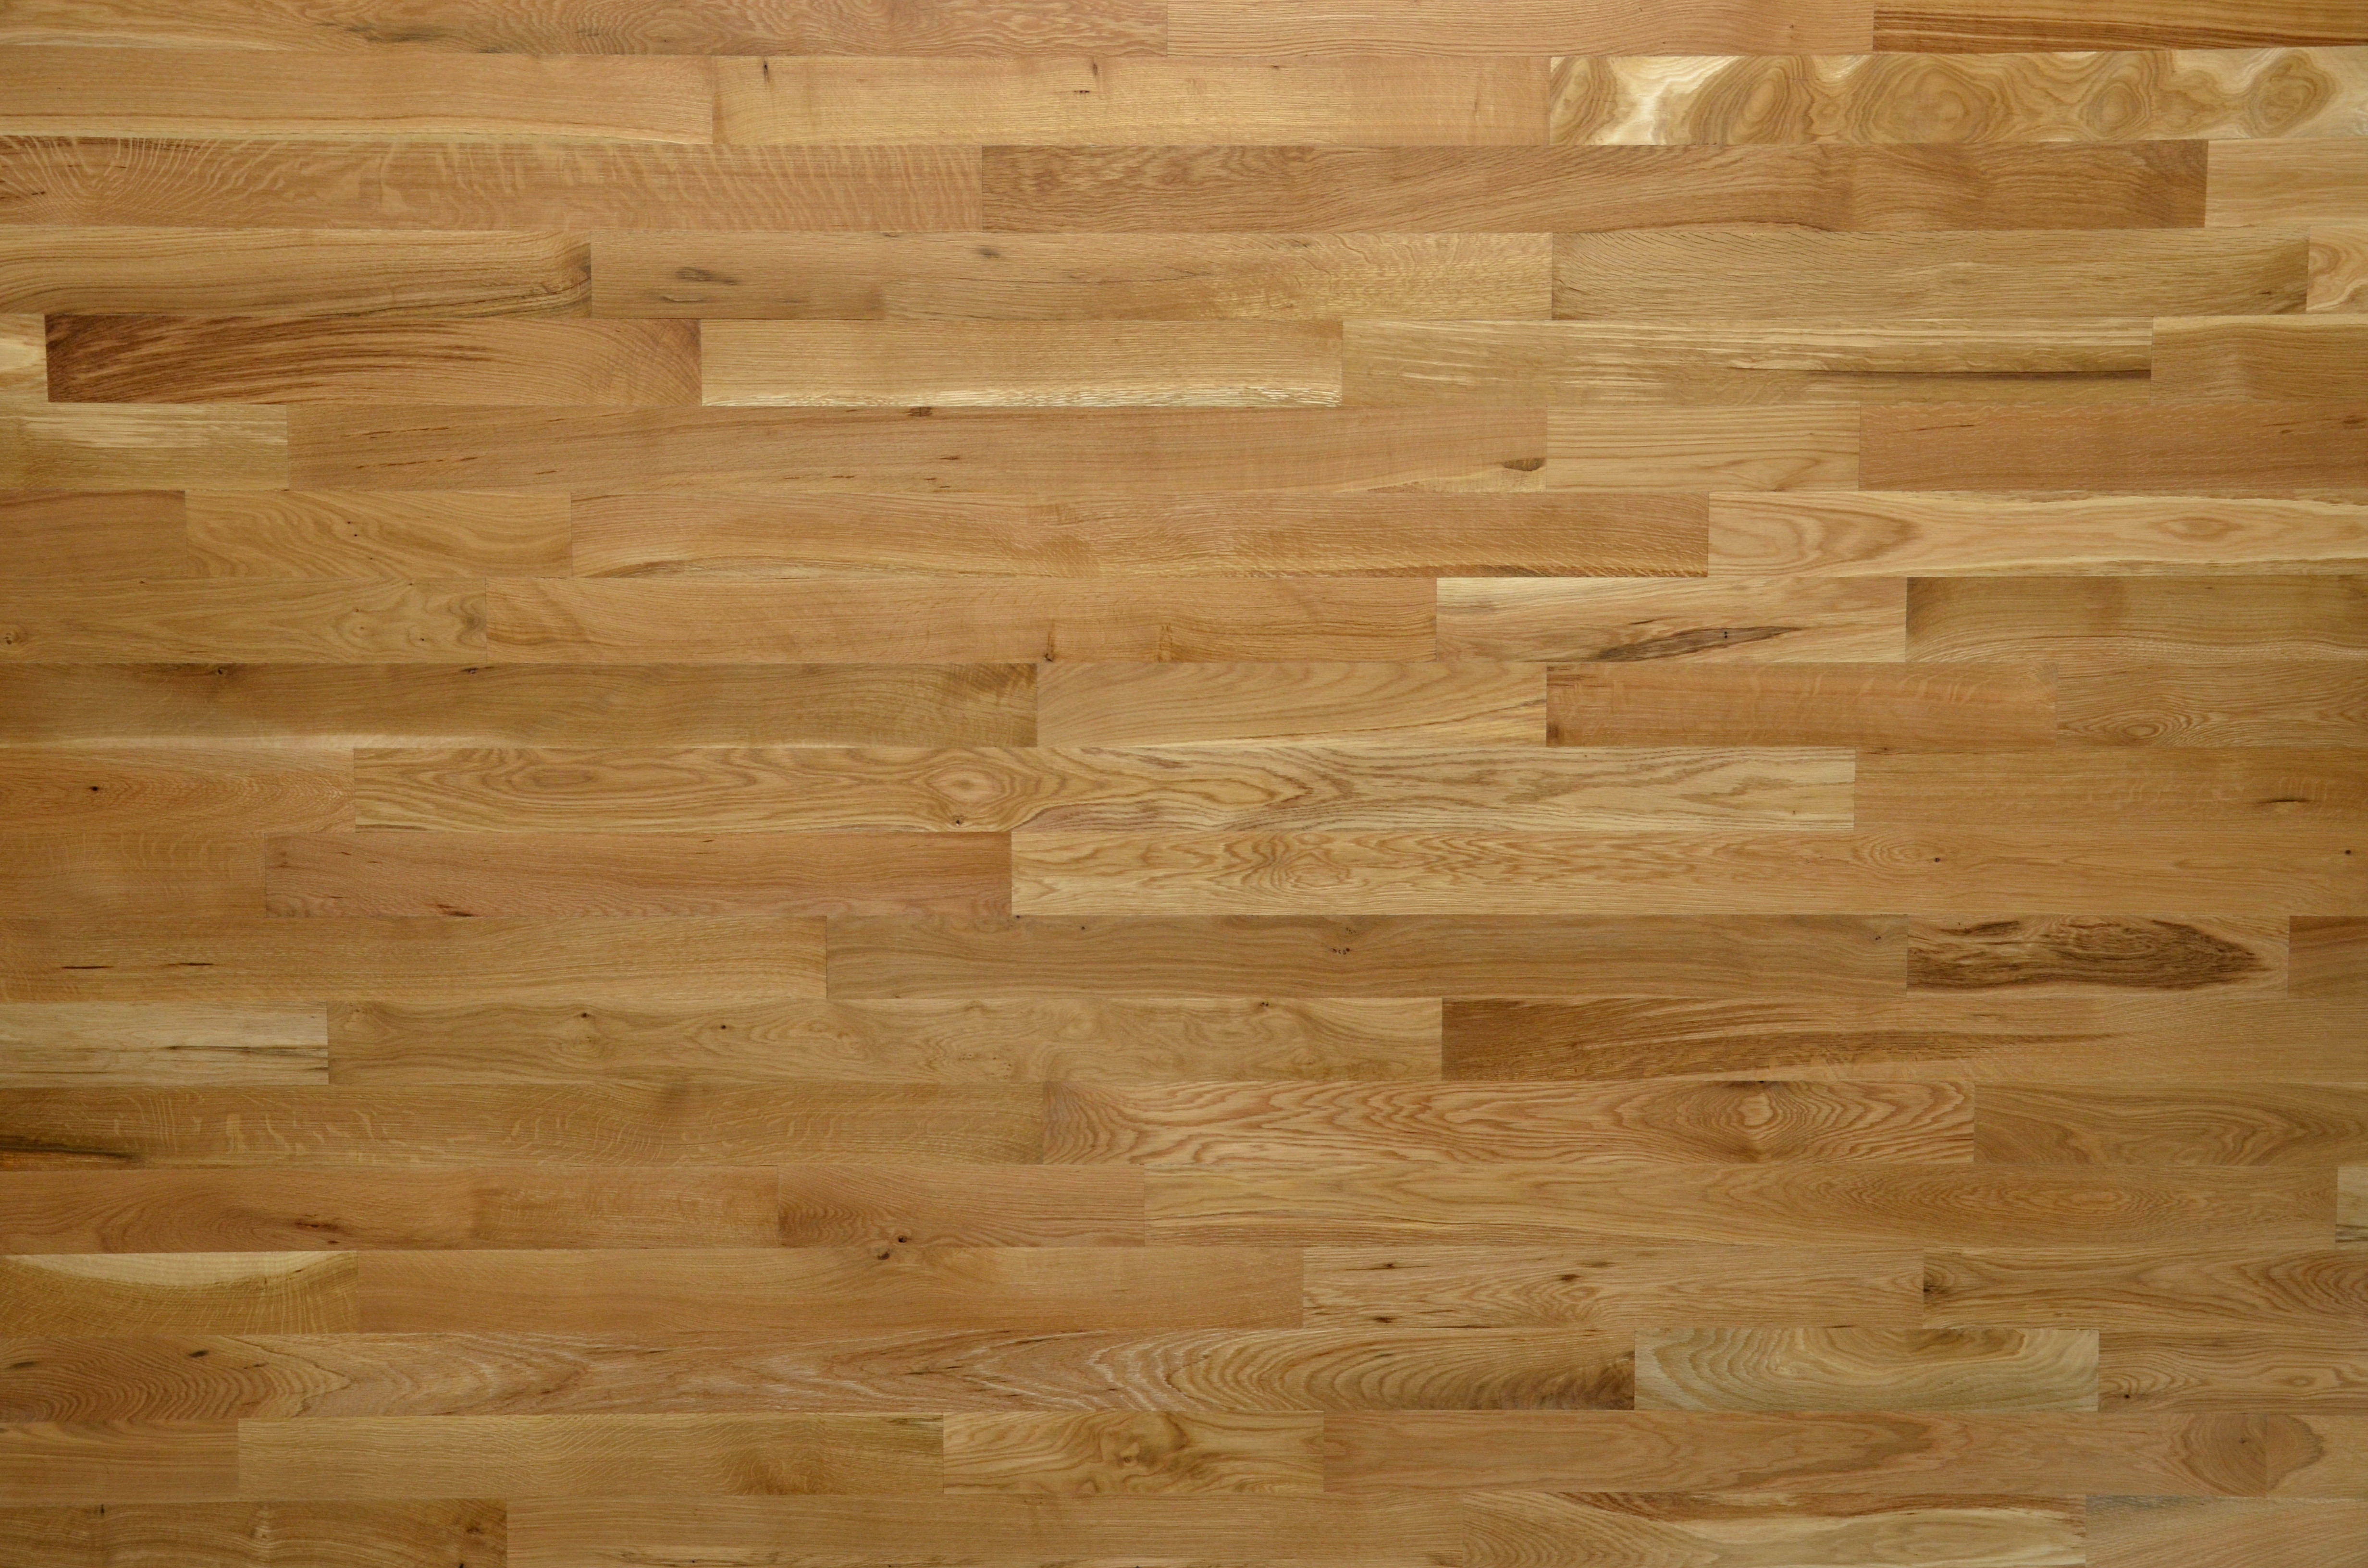 Hardwood Floor Refinishing Minneapolis Of Lacrosse Hardwood Flooring Walnut White Oak Red Oak Hickory Regarding 1 Common White Oak